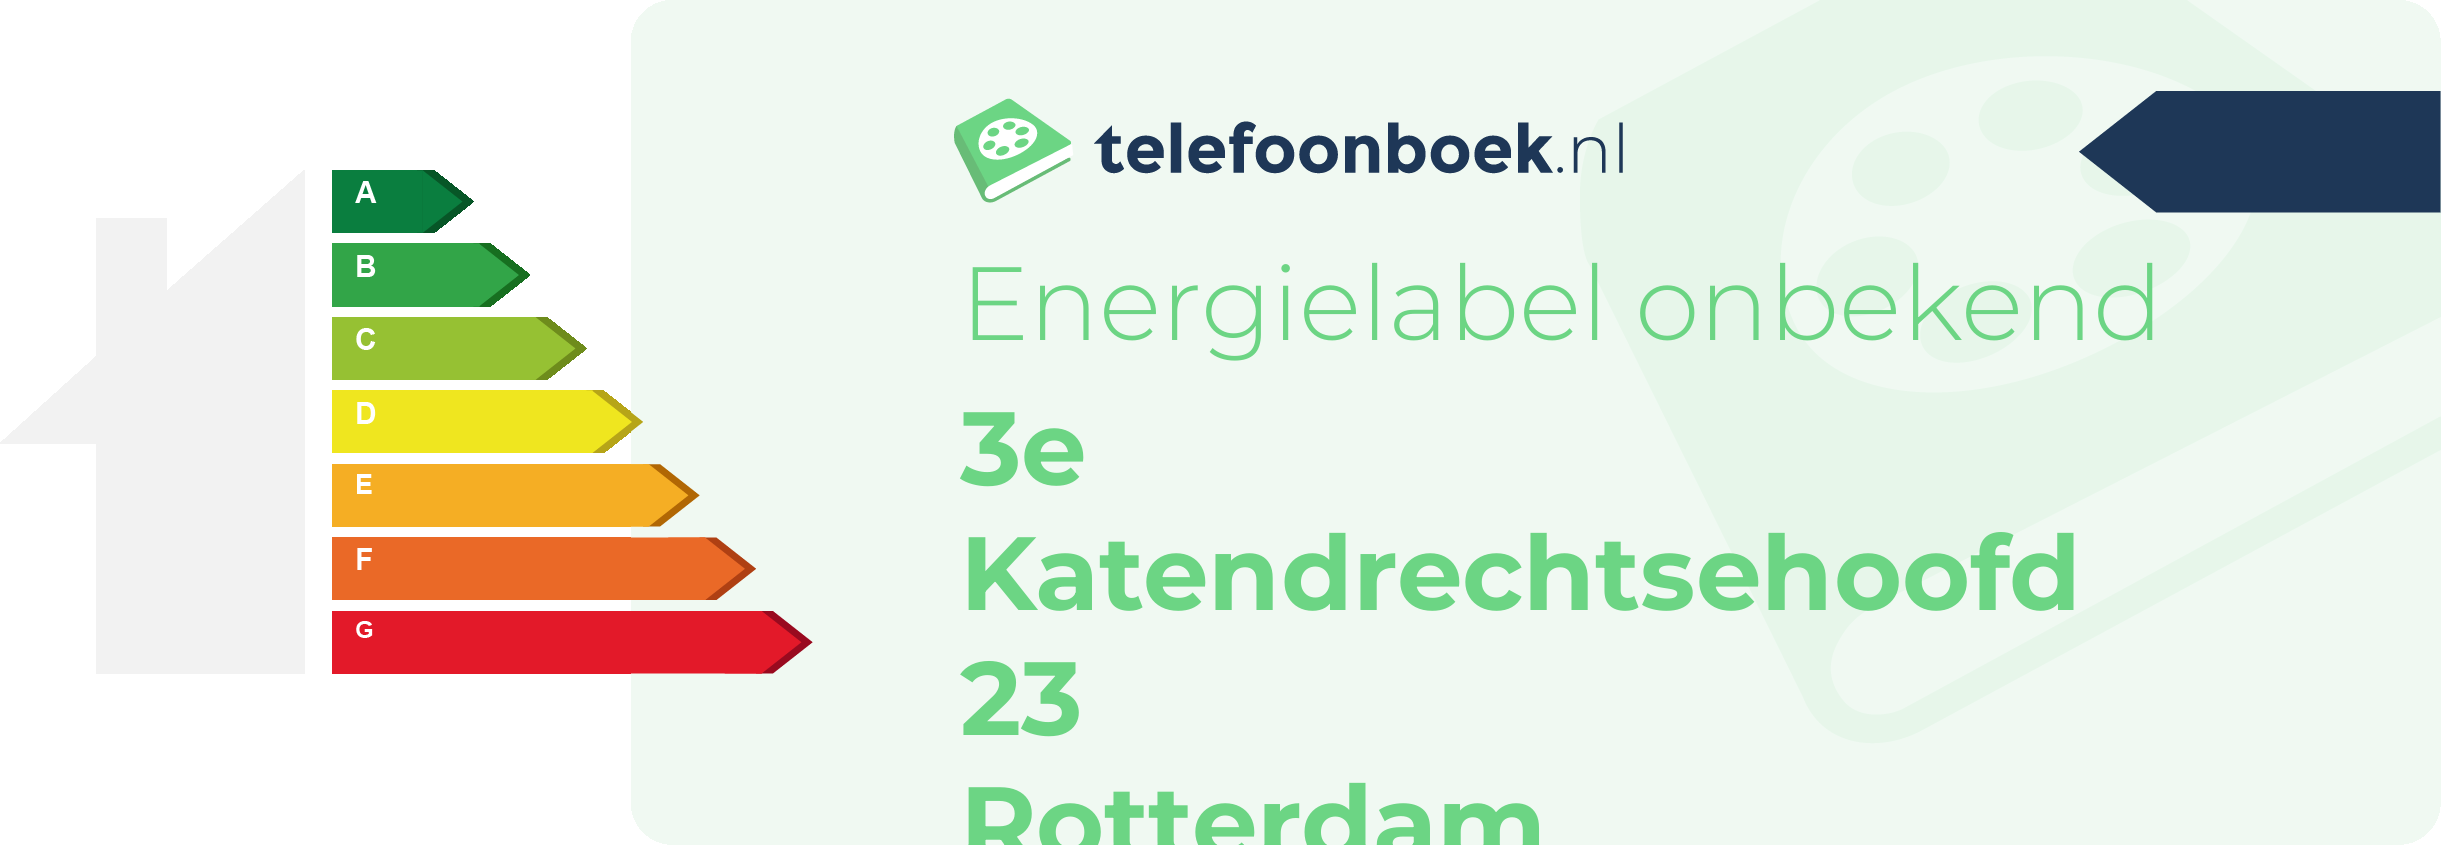 Energielabel 3e Katendrechtsehoofd 23 Rotterdam